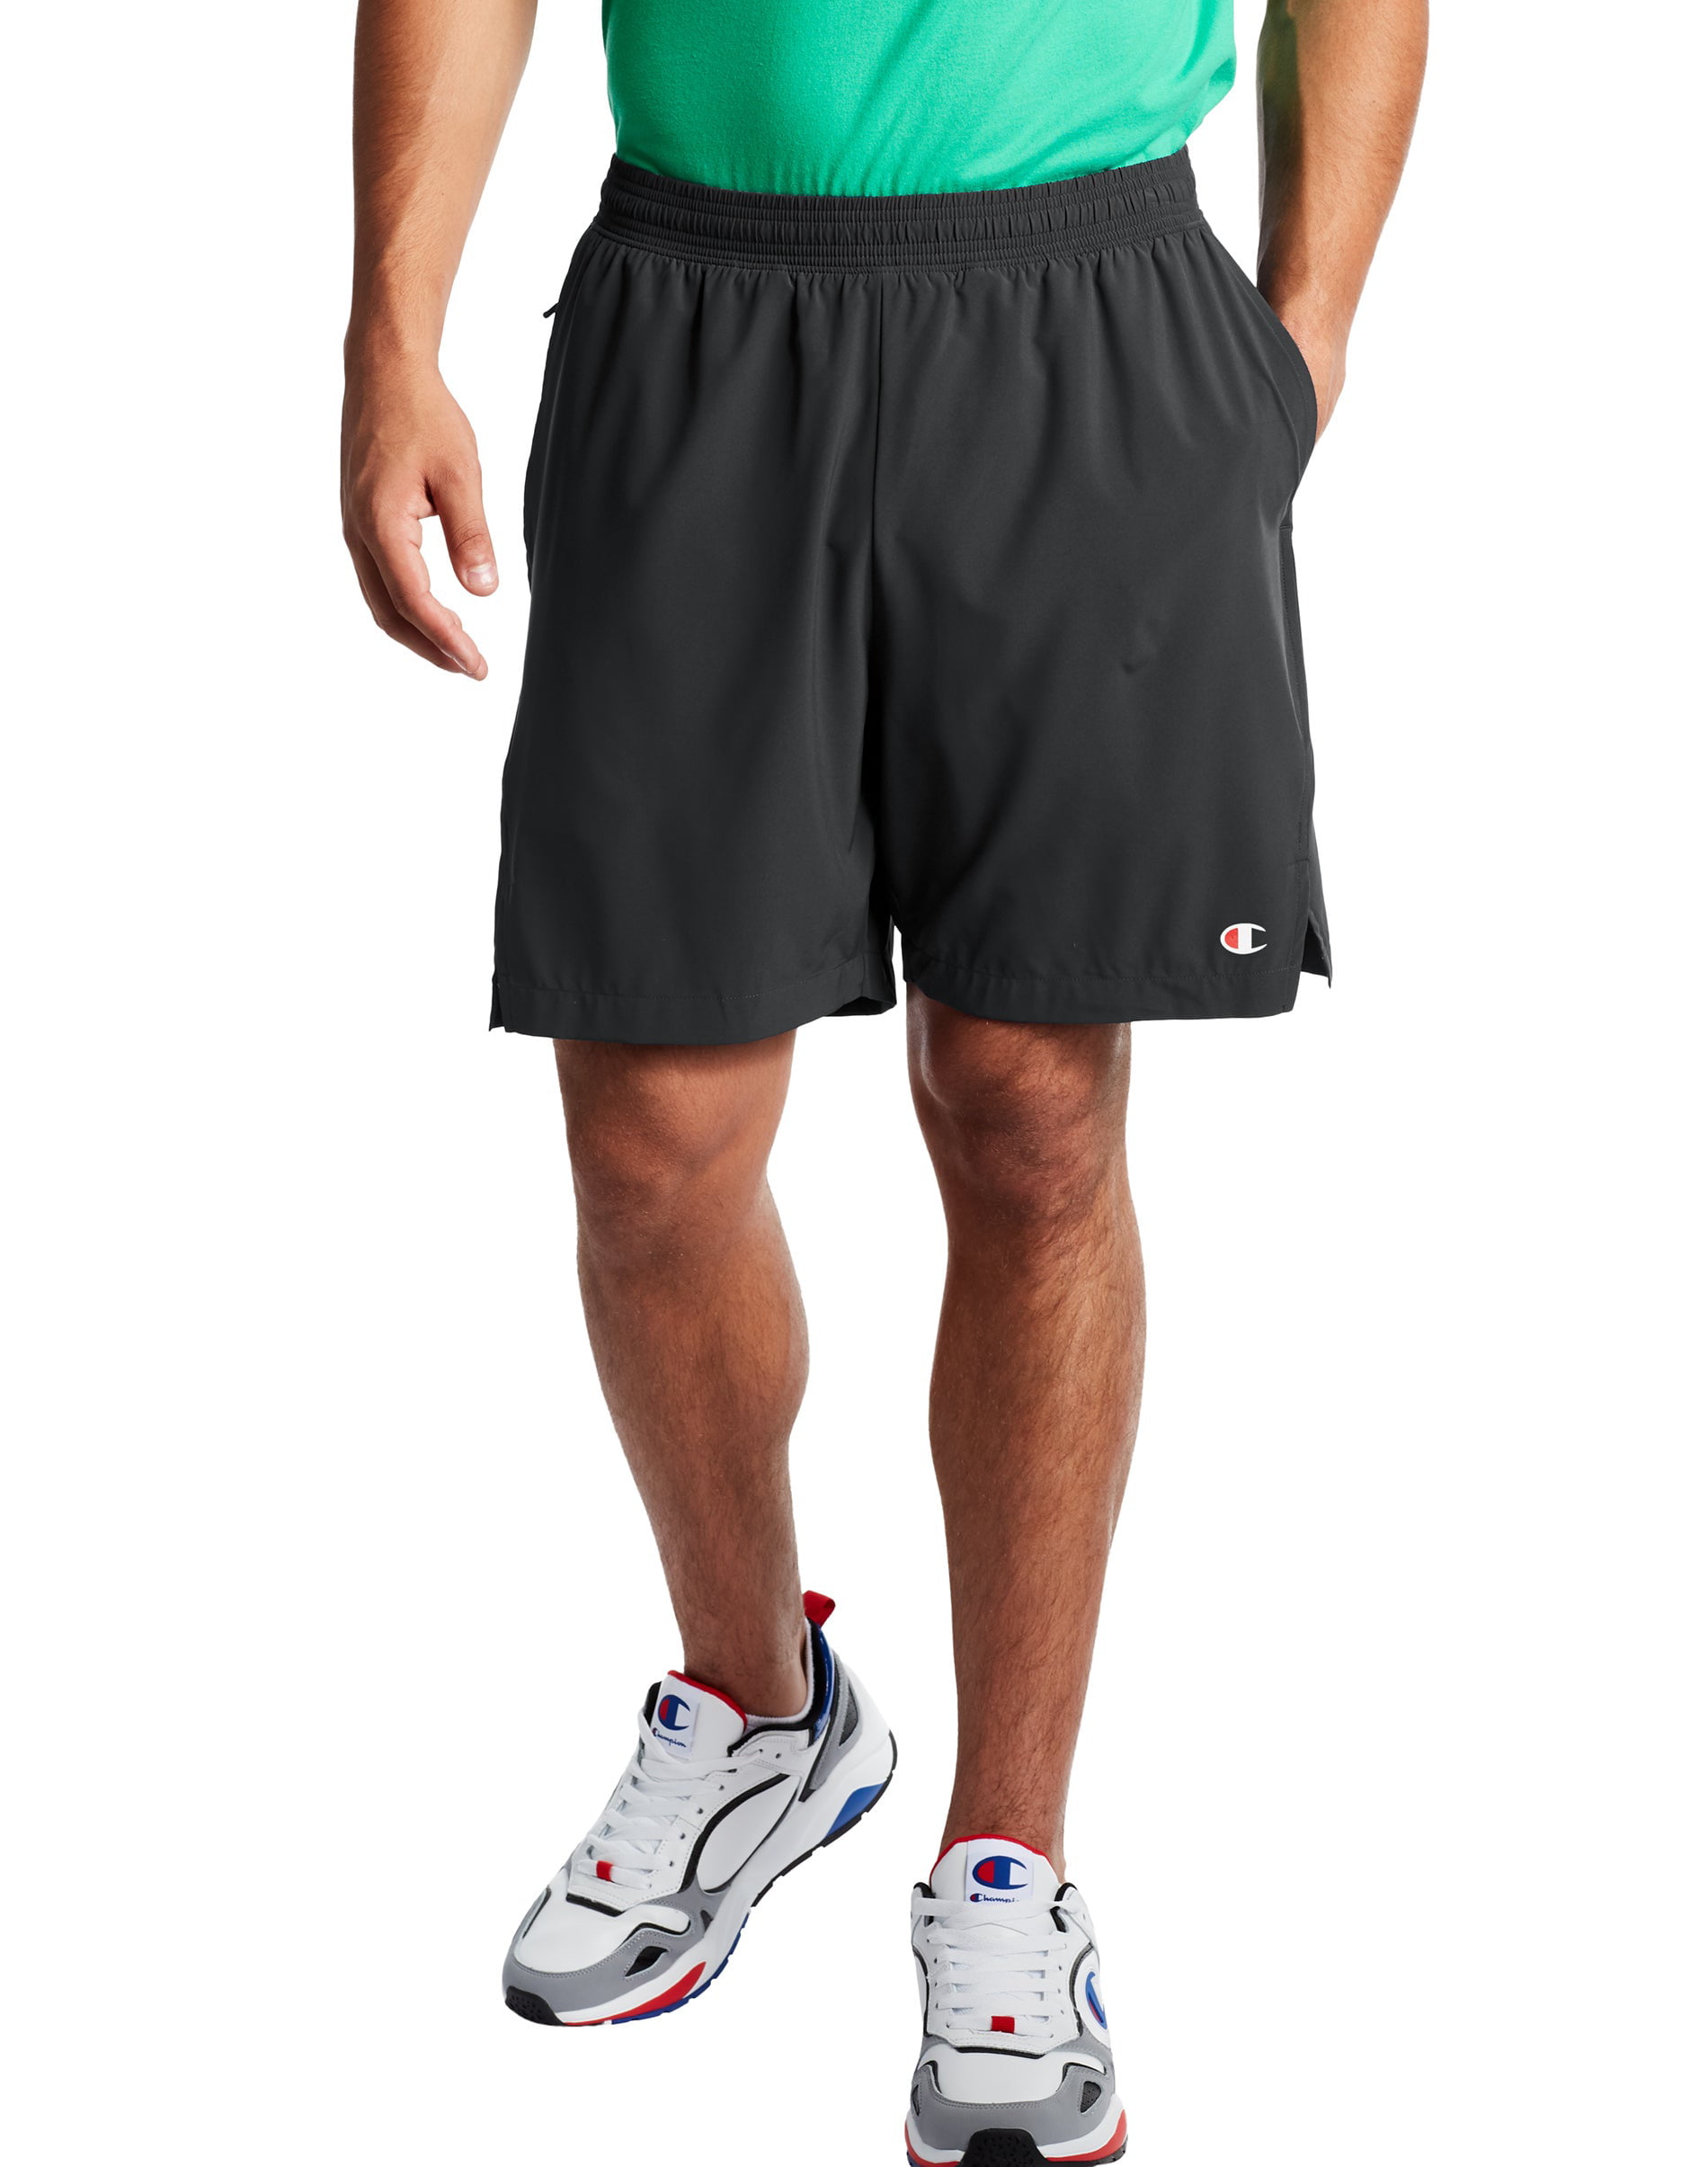 Champion Men athletic shorts - Walmart.com